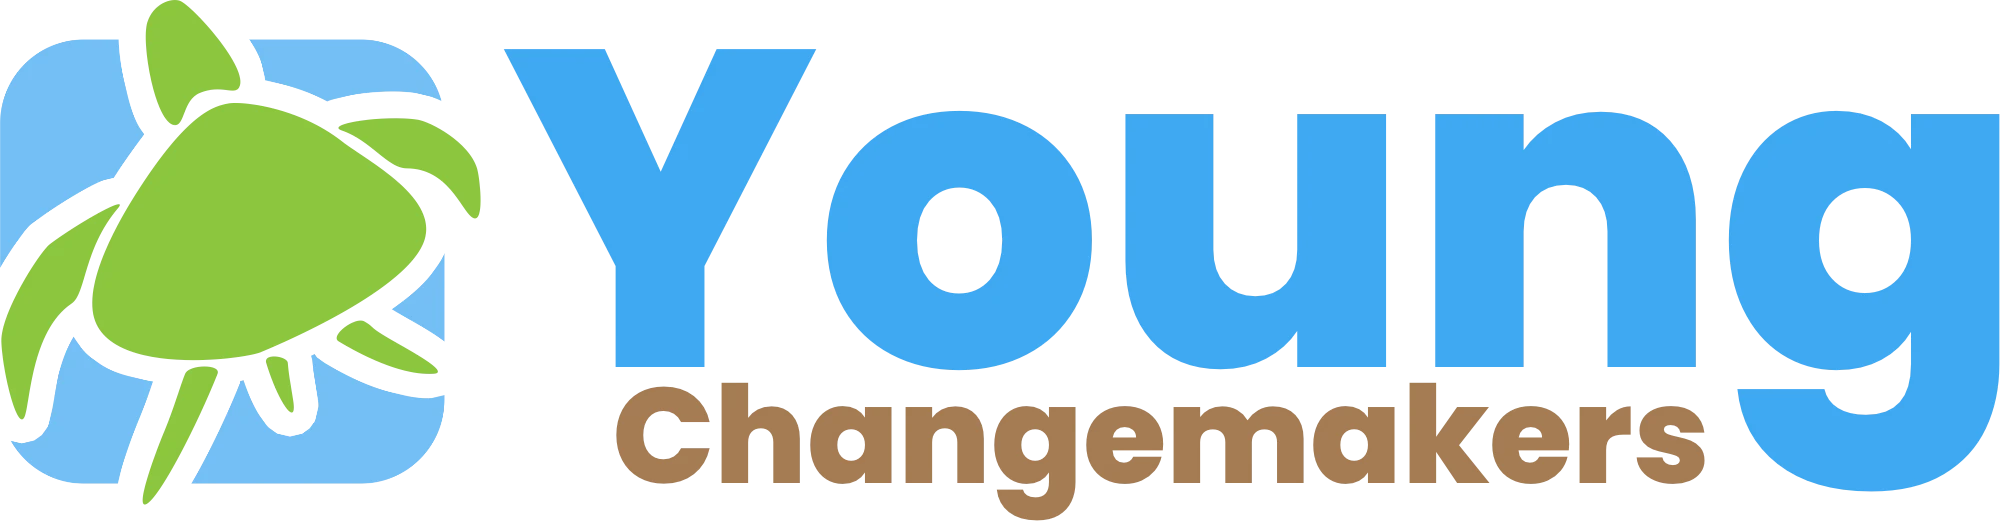 Change Maker's Choose logo of a green tutle on a blue background